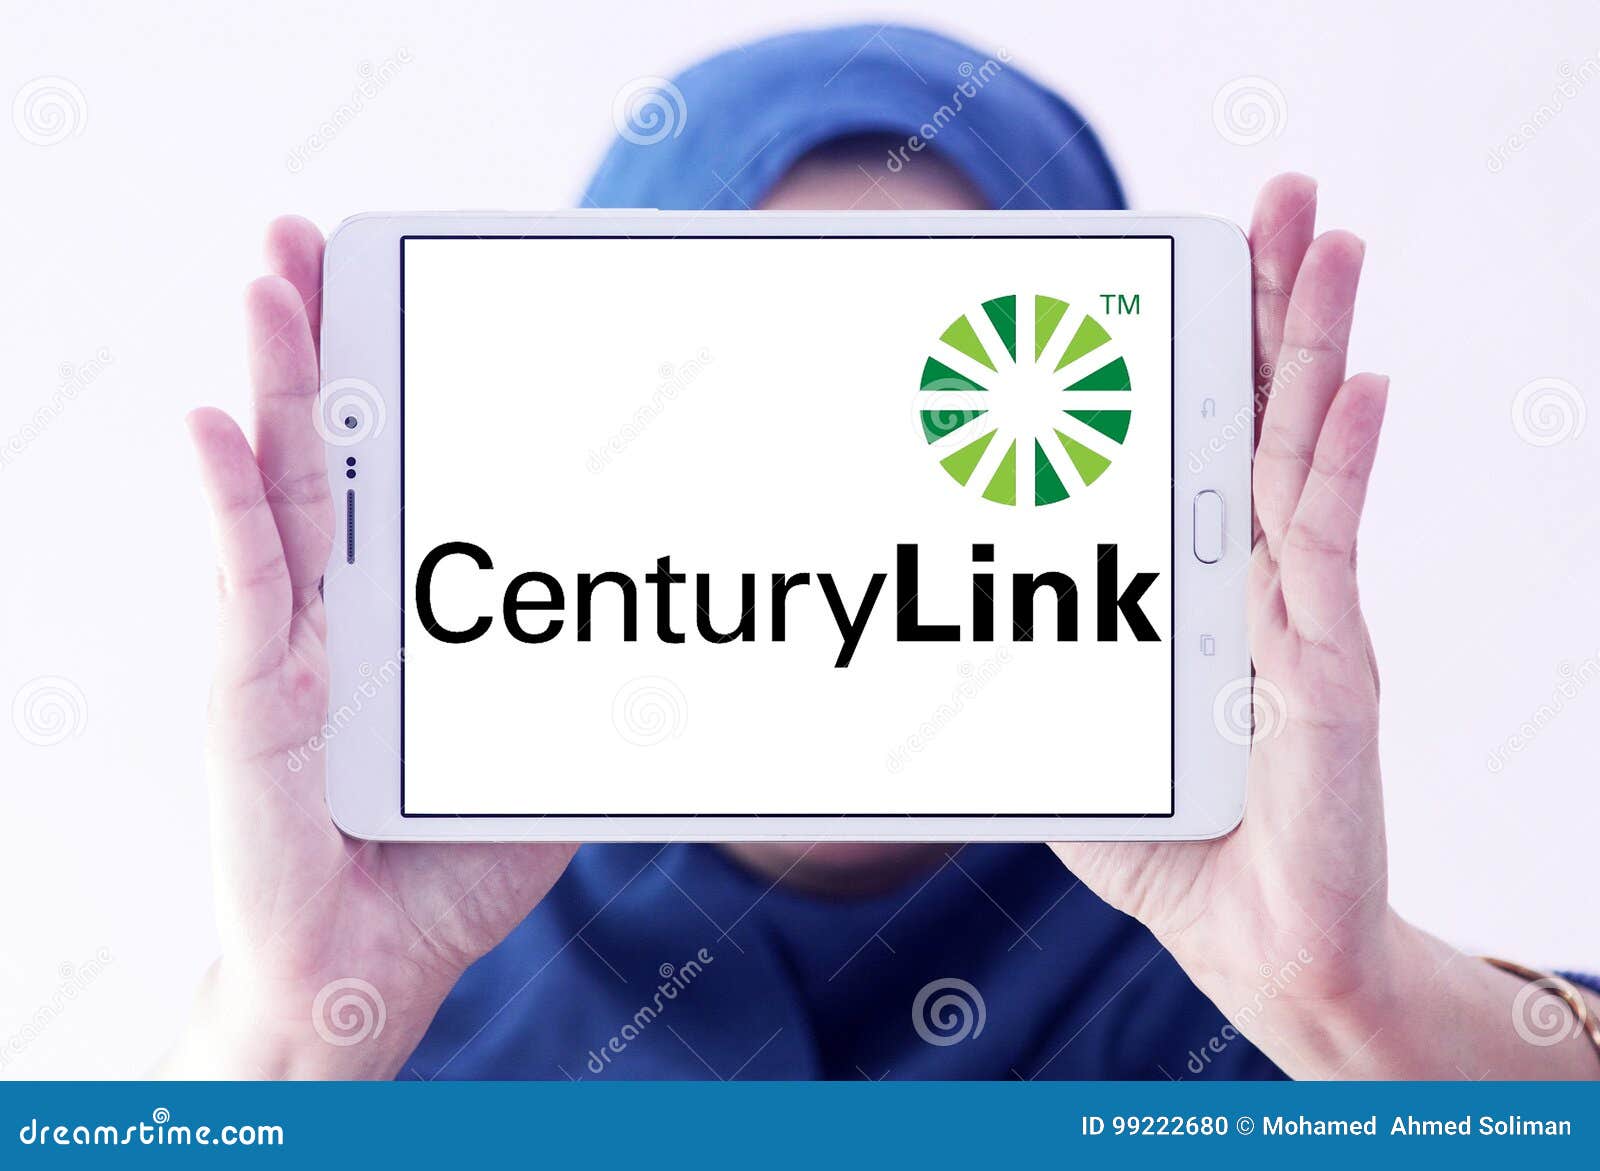 Residential Services: Home Internet, TV, & Phone | CenturyLink